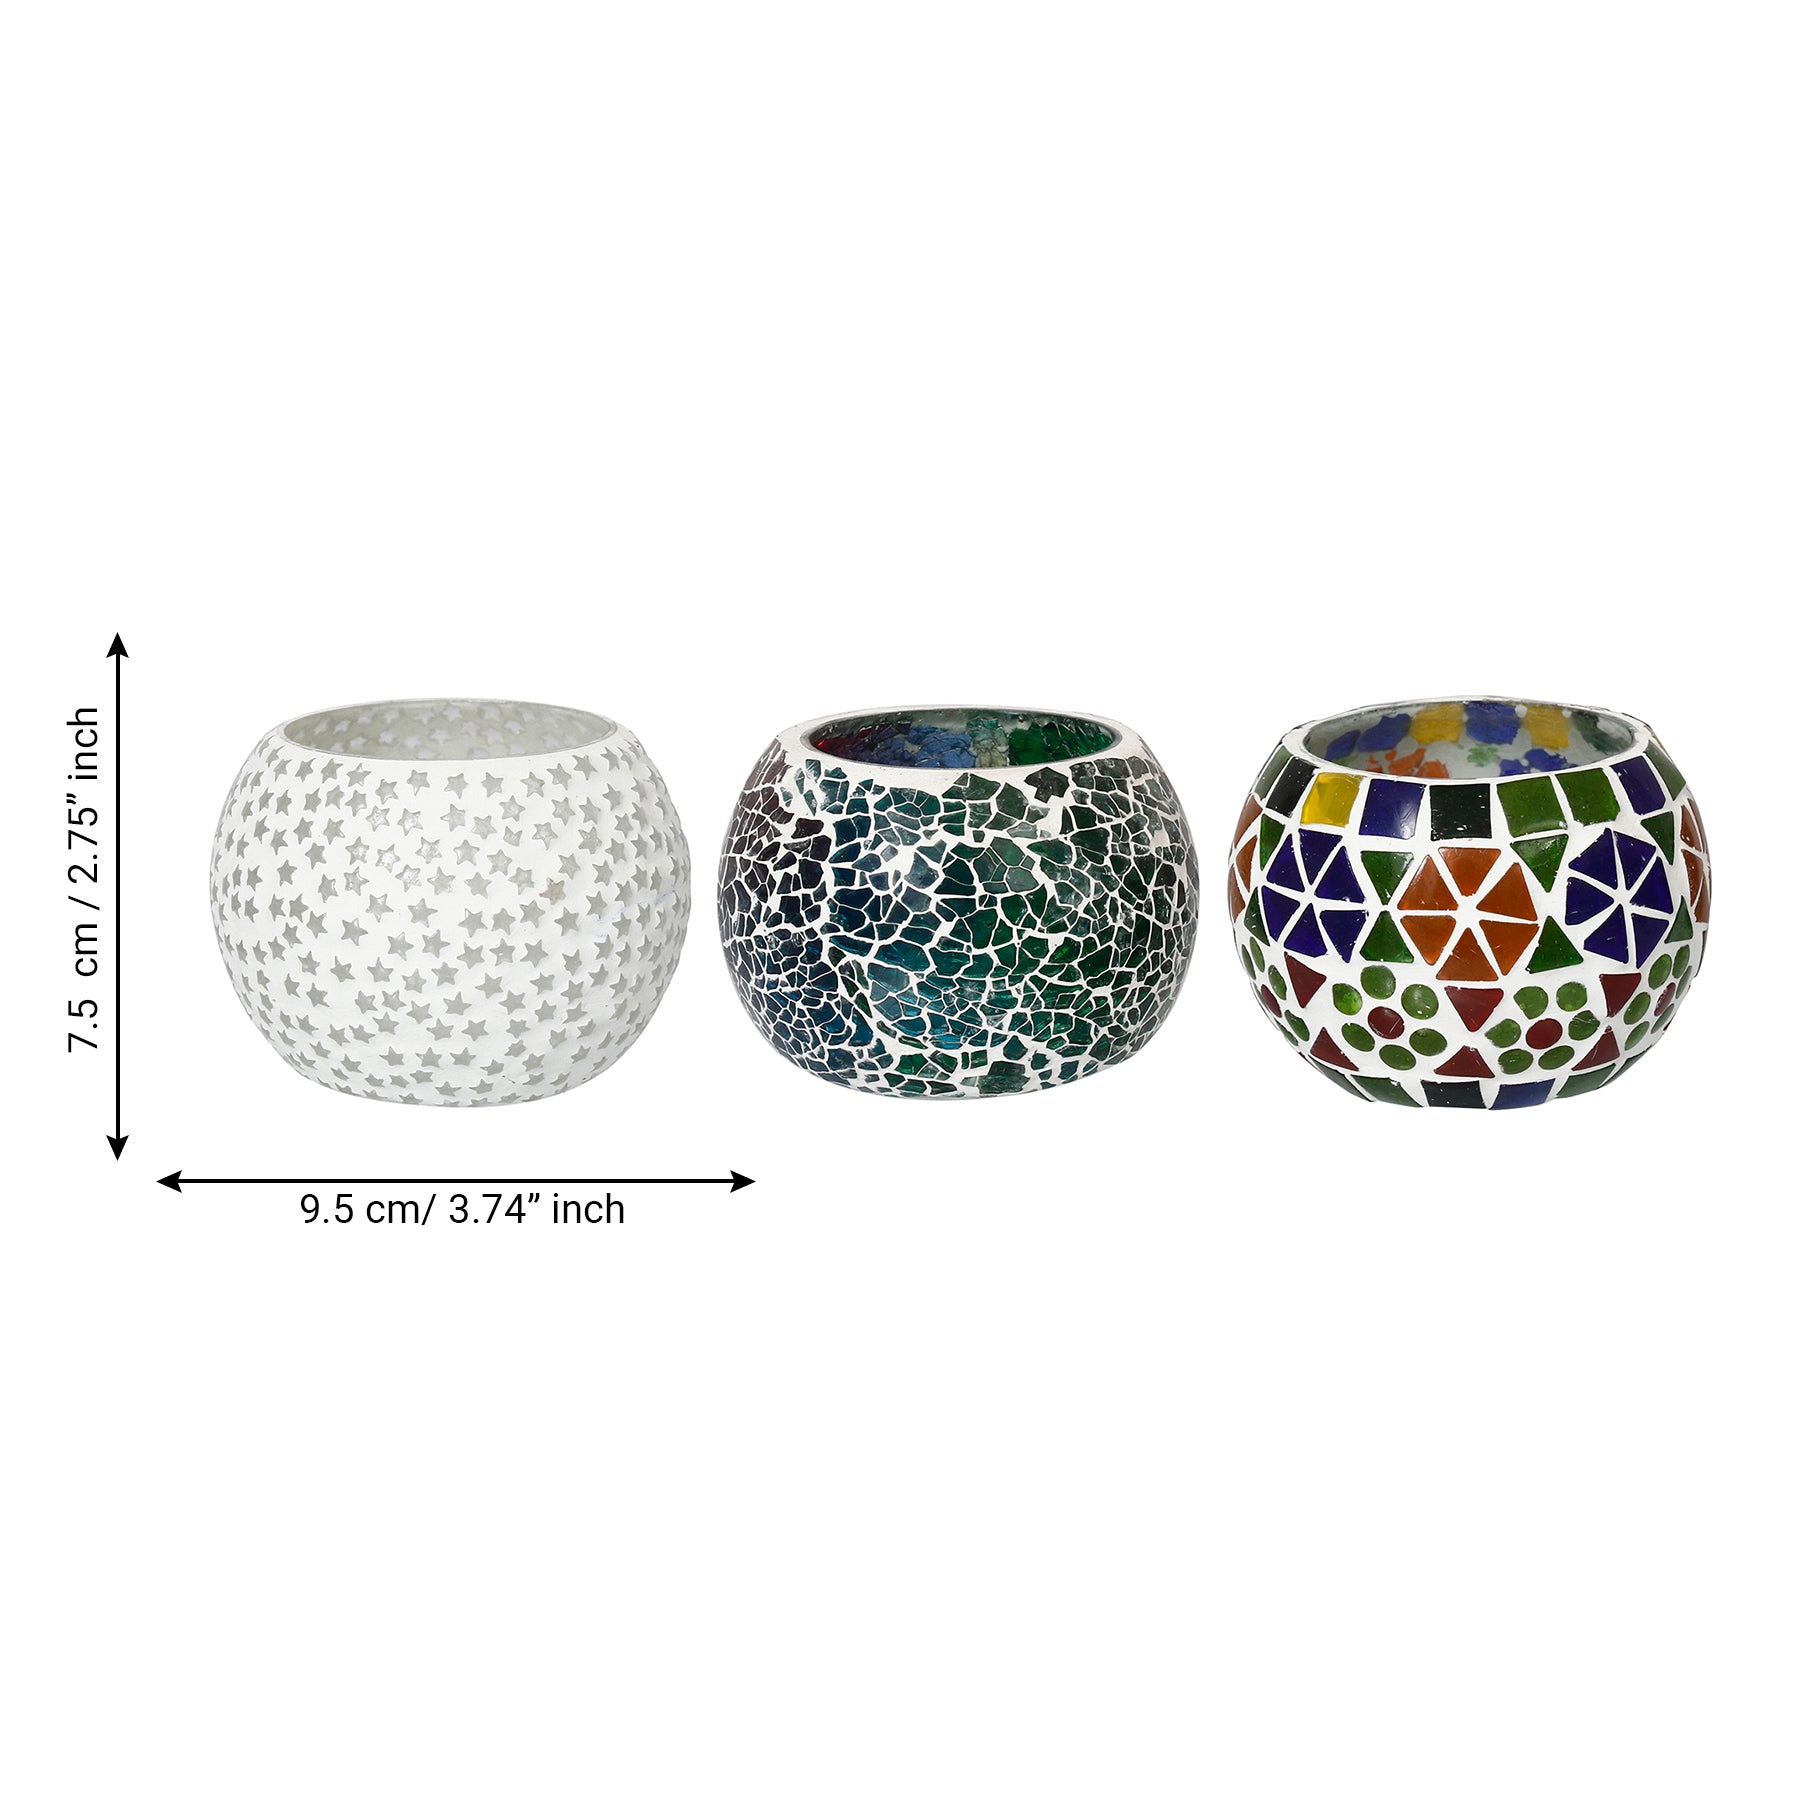 Mosaic Glass Decorative tea light candle holder/Diyas Set of 3 3